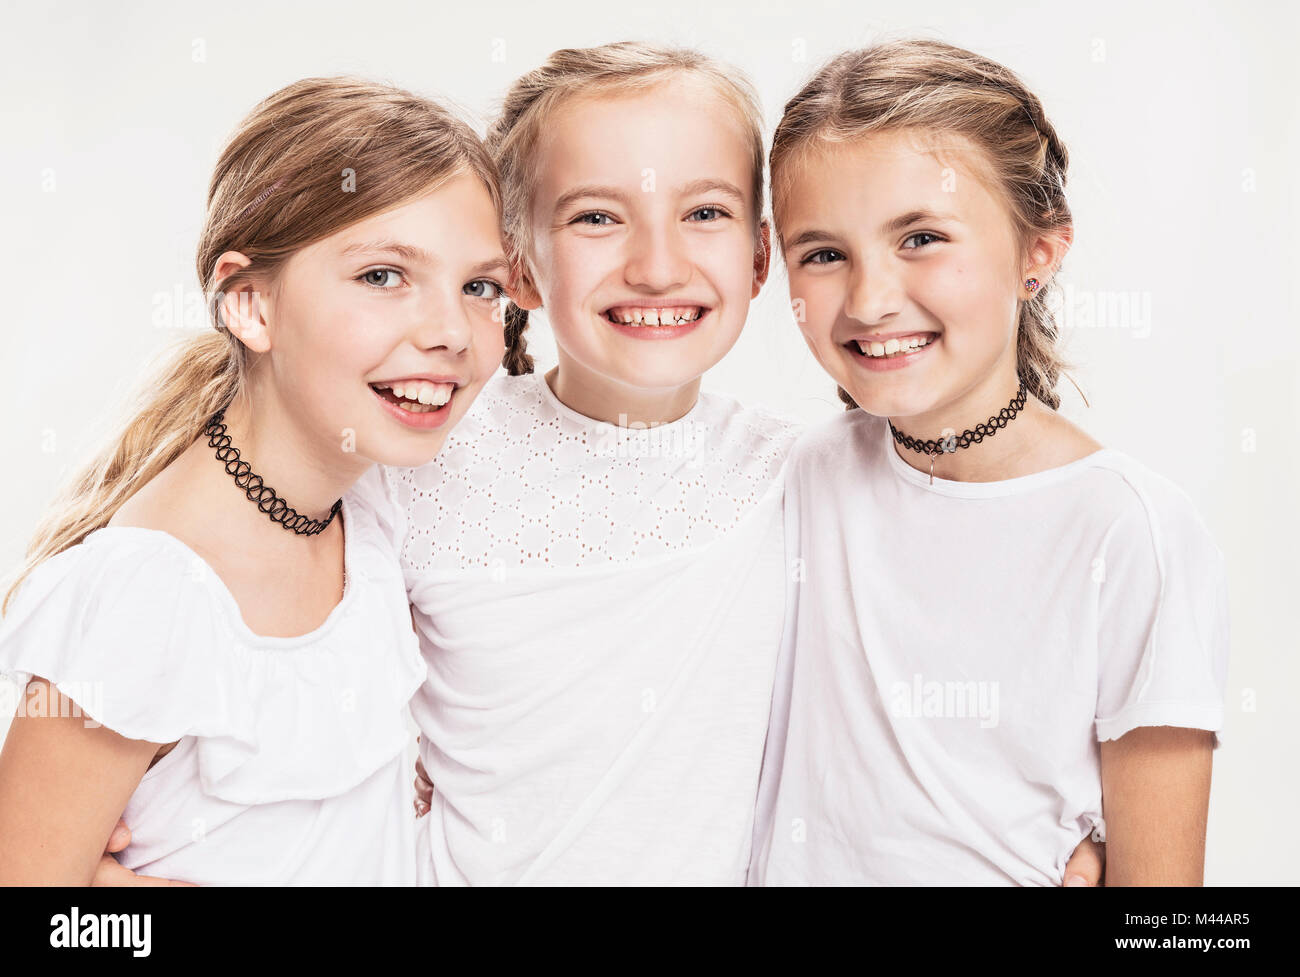 Studio portrait of three girls with blond hair, waist up Stock Photo